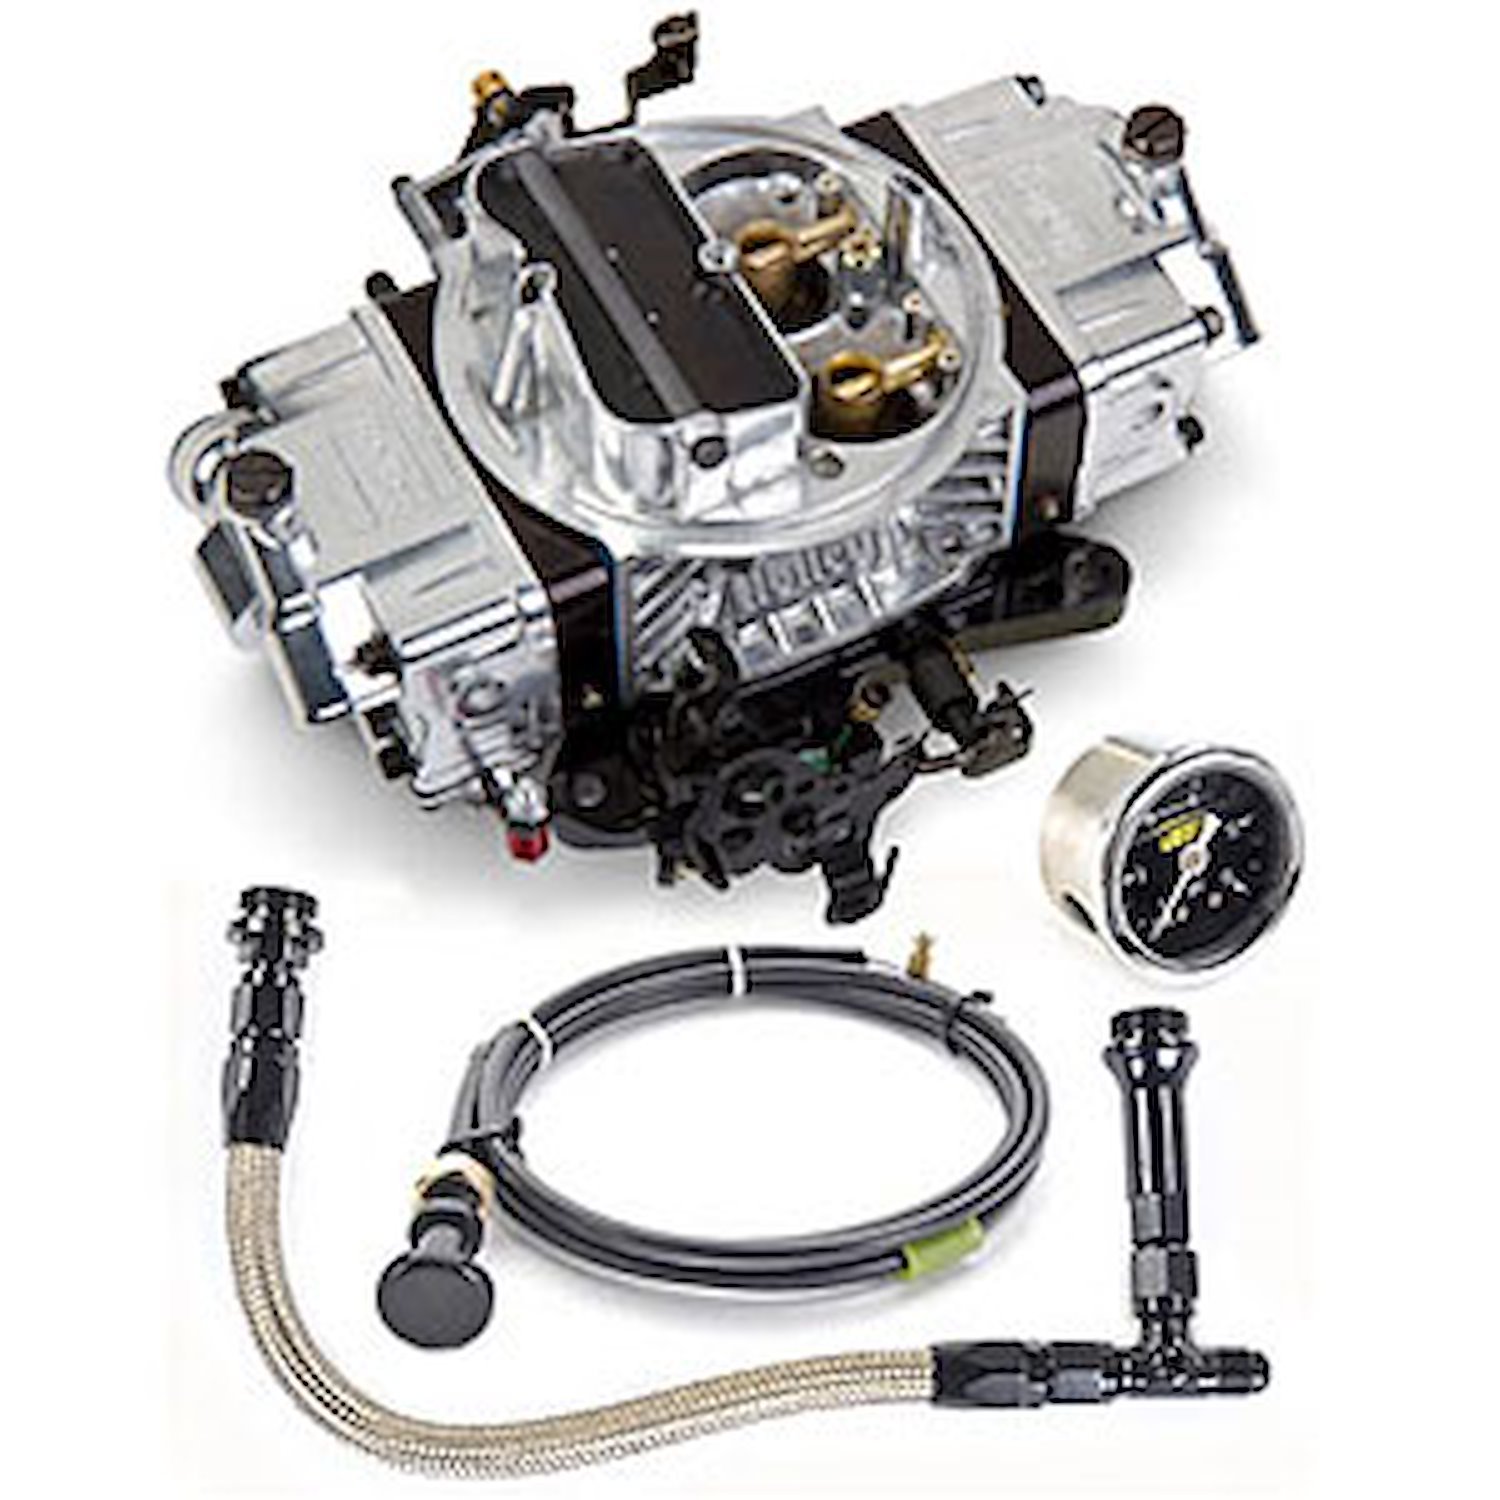 Ultra Double Pumper Carburetor Kit Includes: 750 cfm